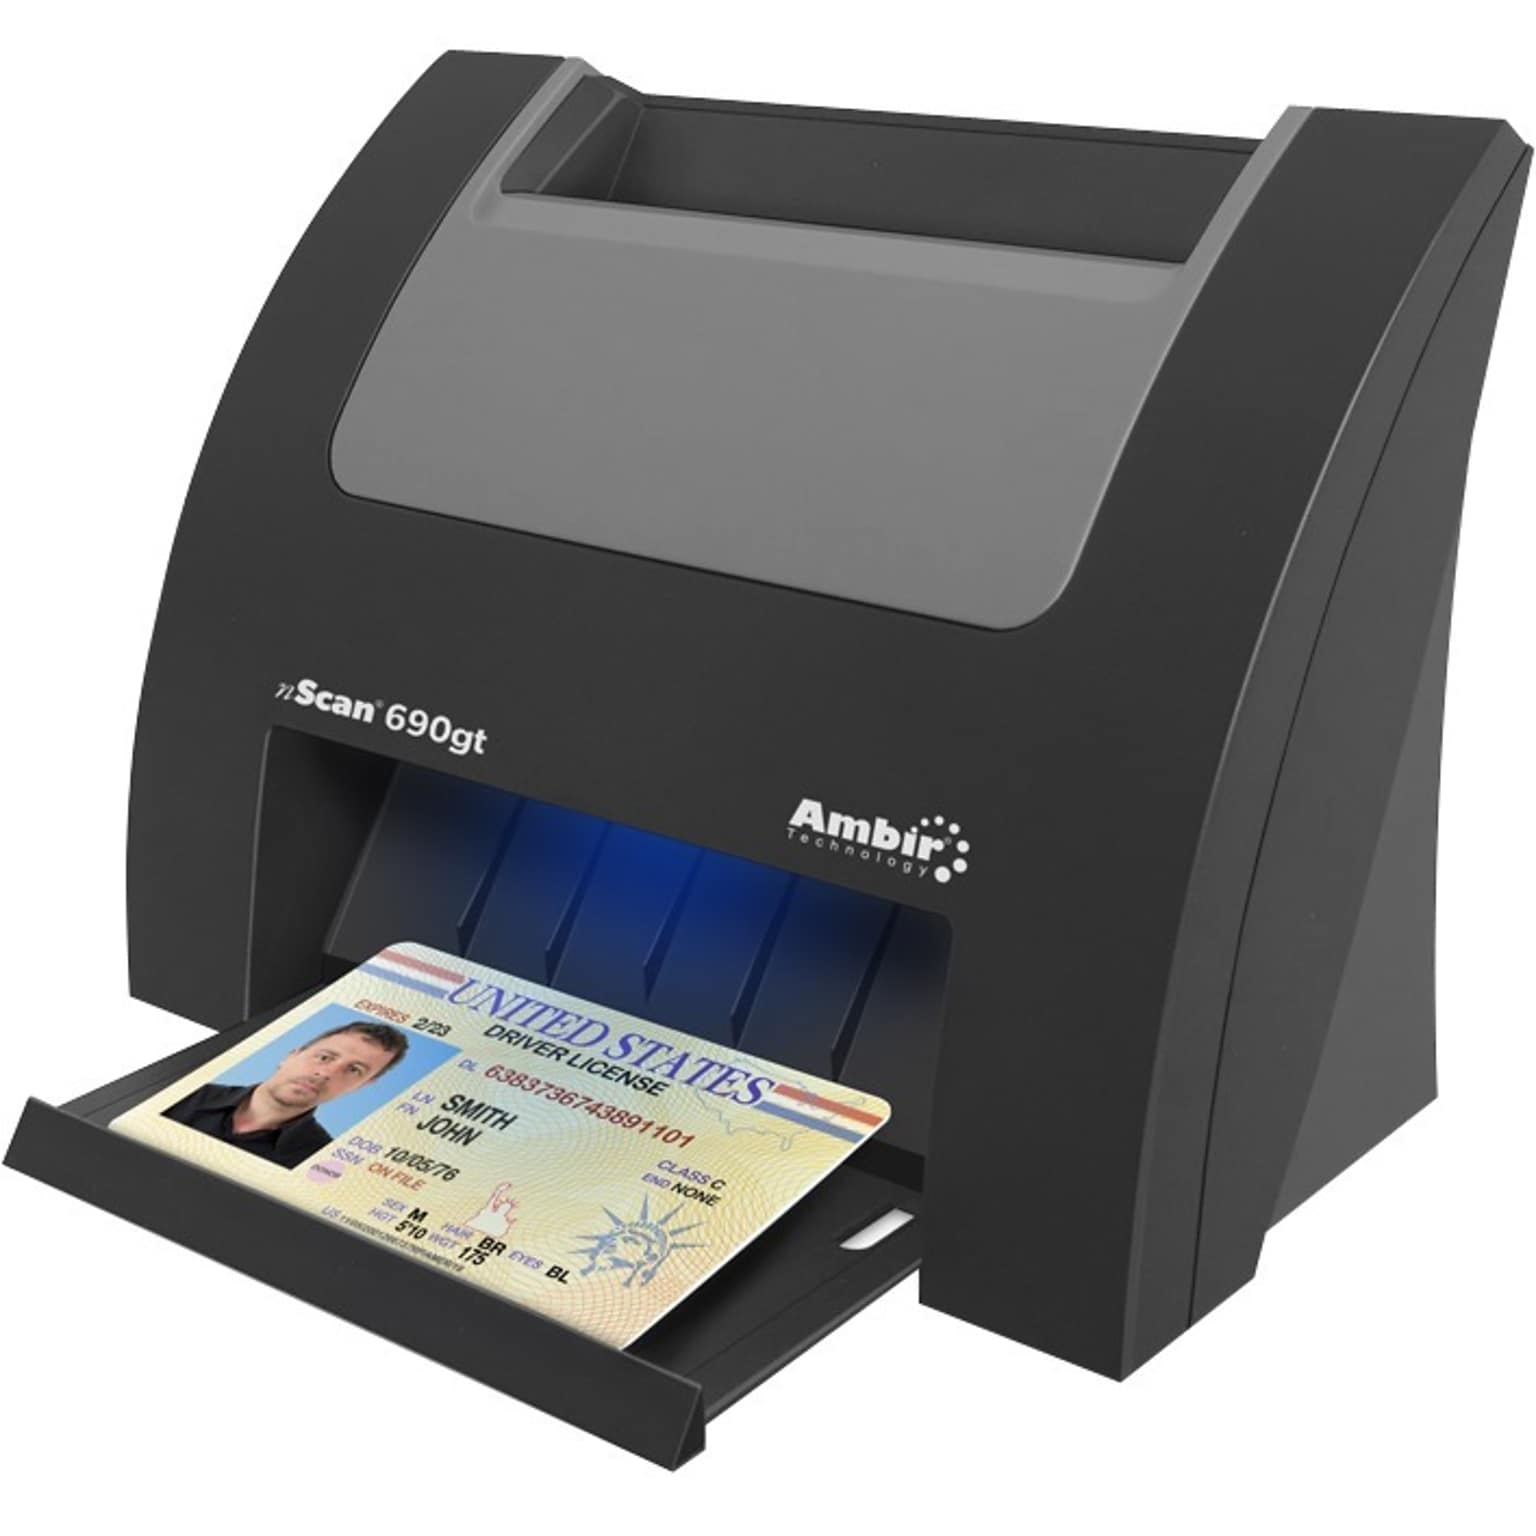 Ambir nScan 690gt DS690GT-AS Desktop Card Scanner,  Black